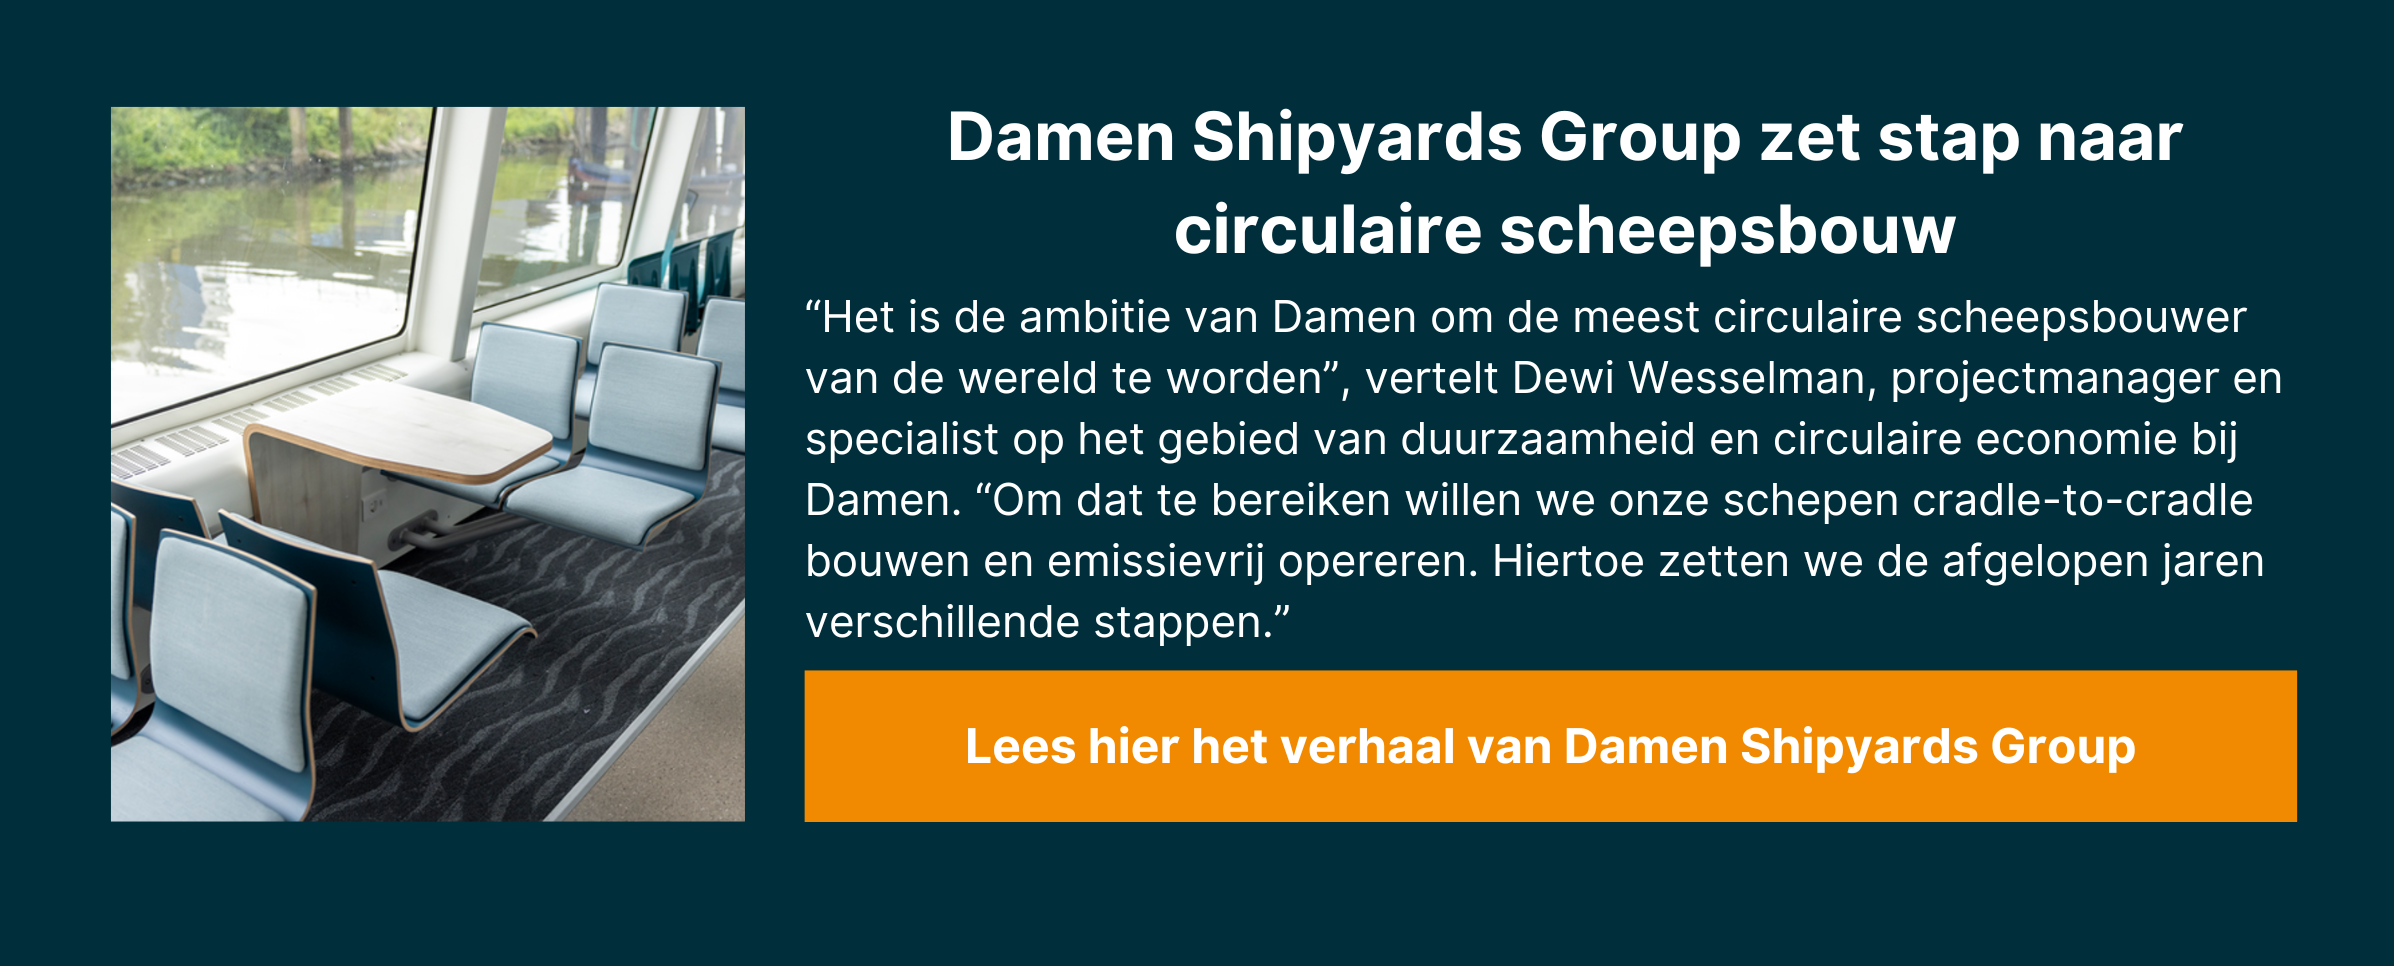 Damen Shipyards Group